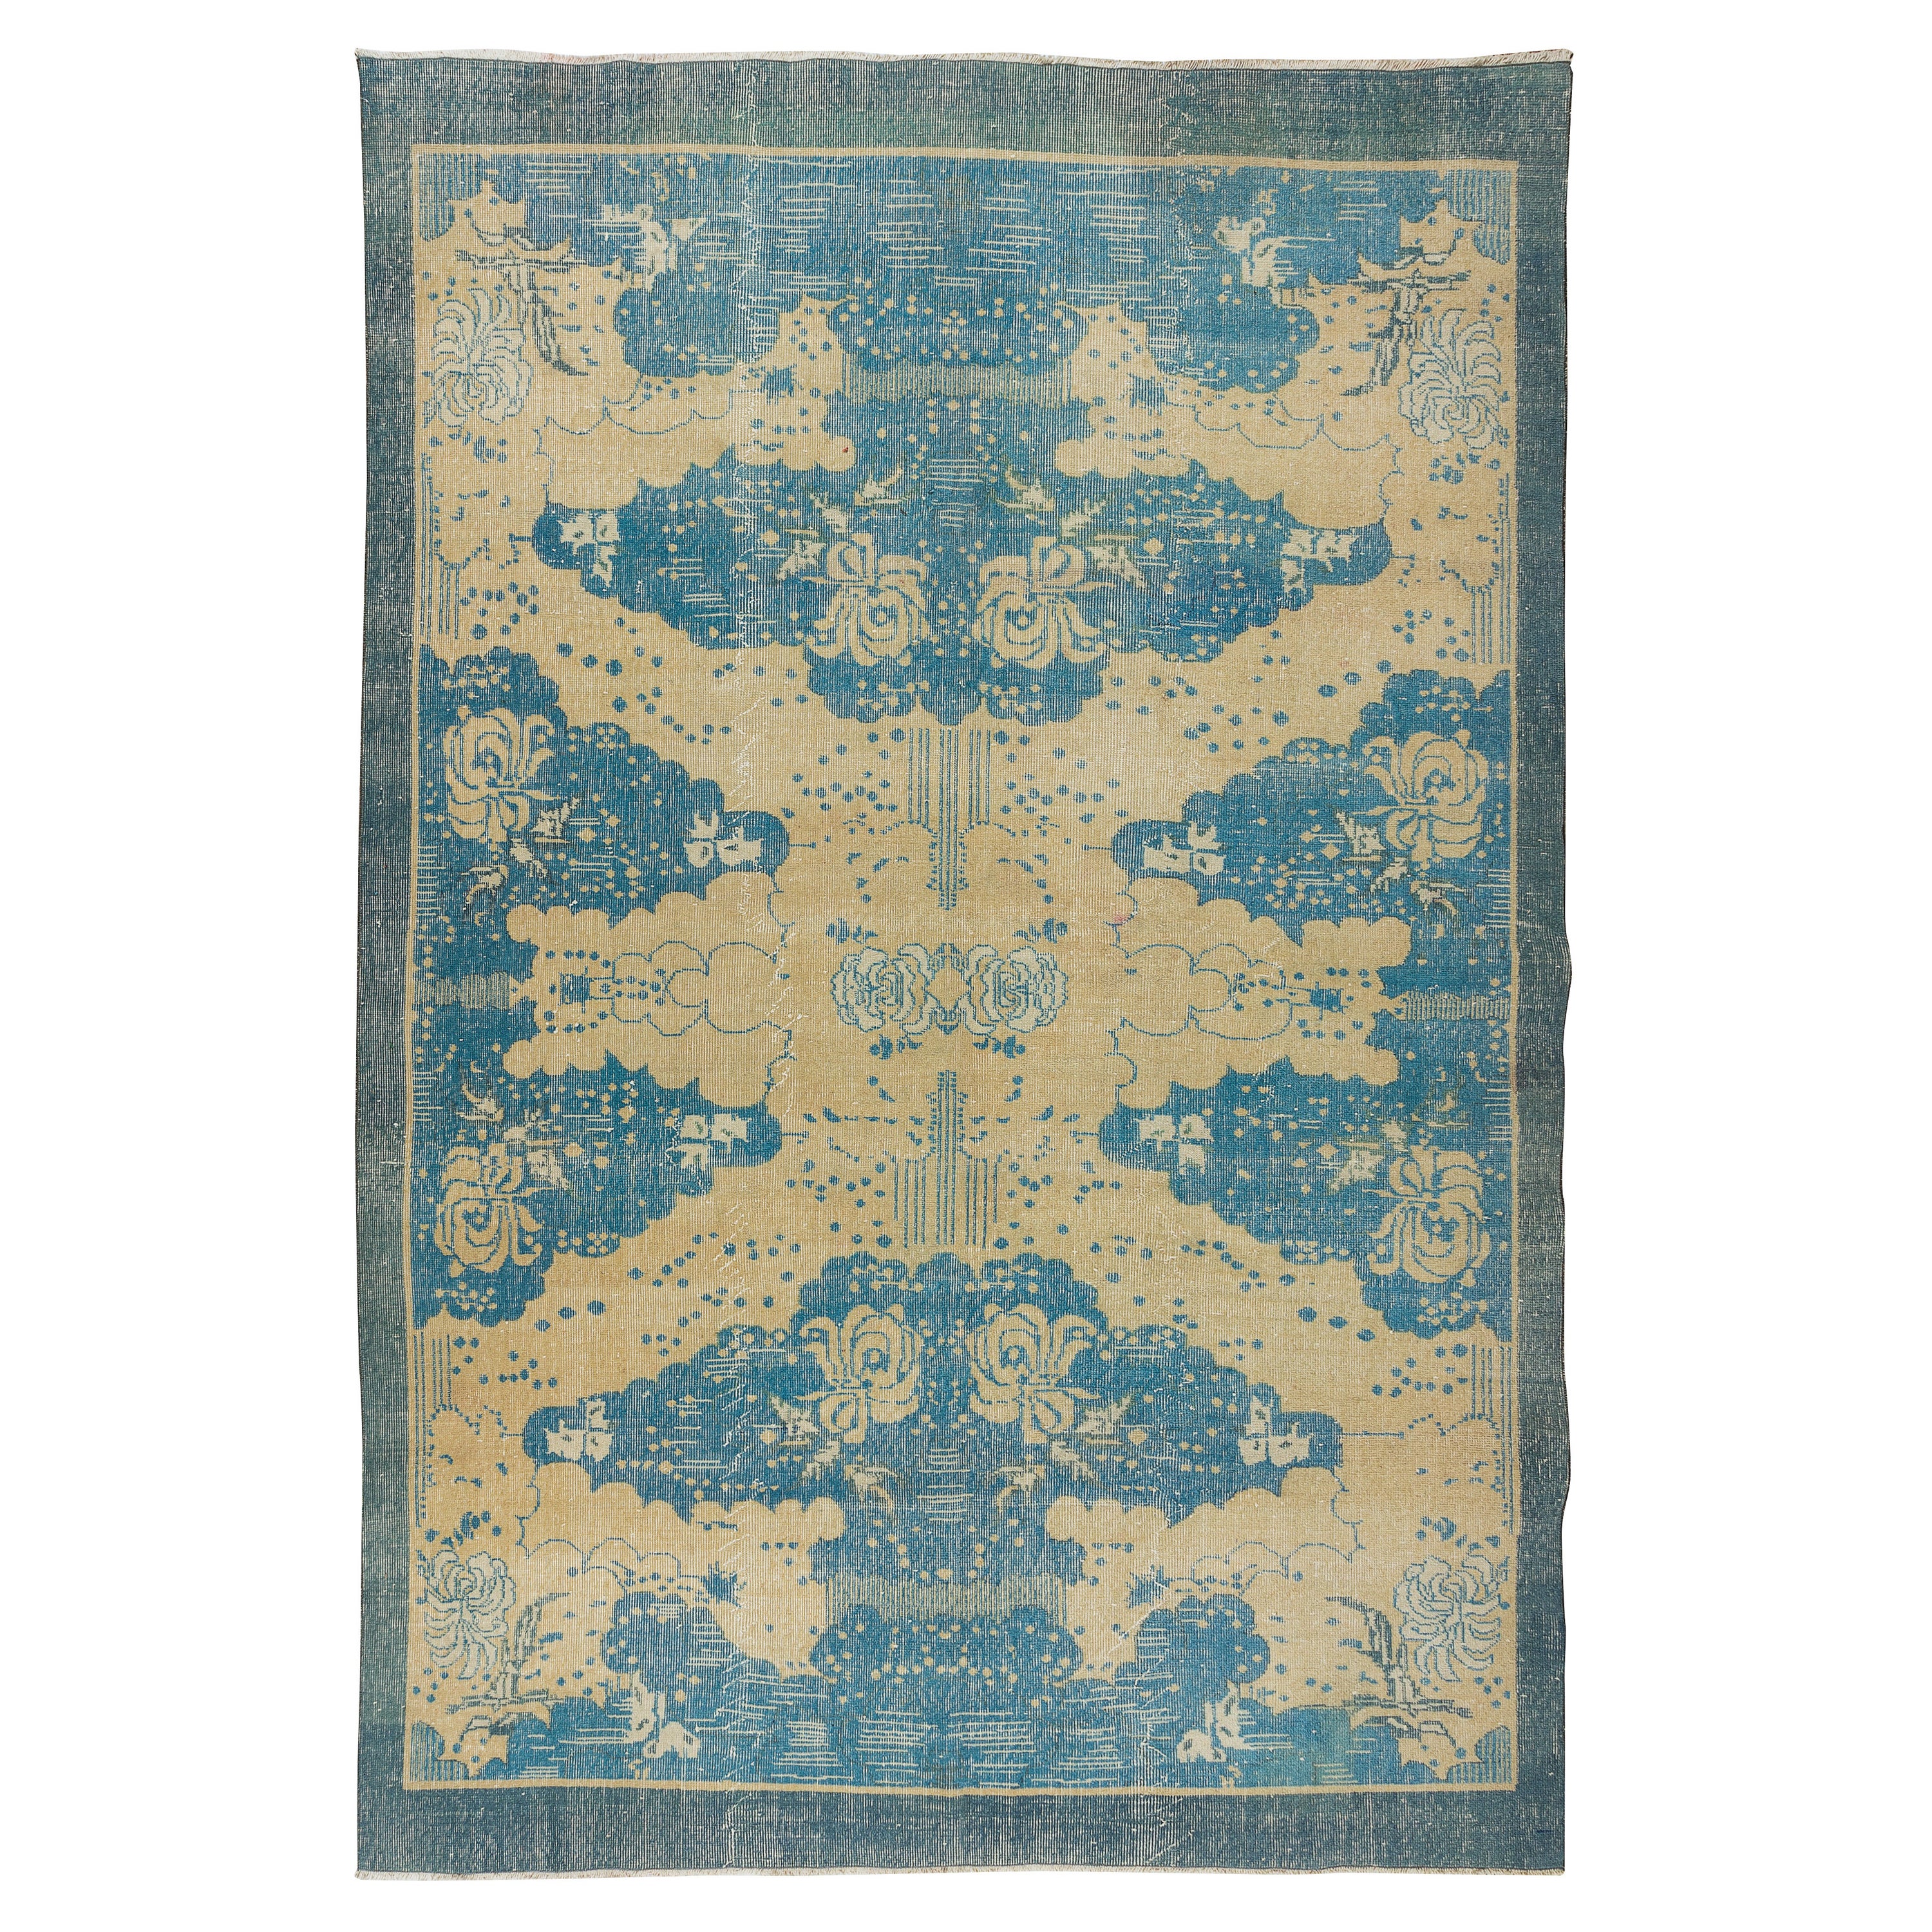 7x10.2 Ft Vintage Turkish Area Rug, Handmade Woolen Carpet in Beige and Blue